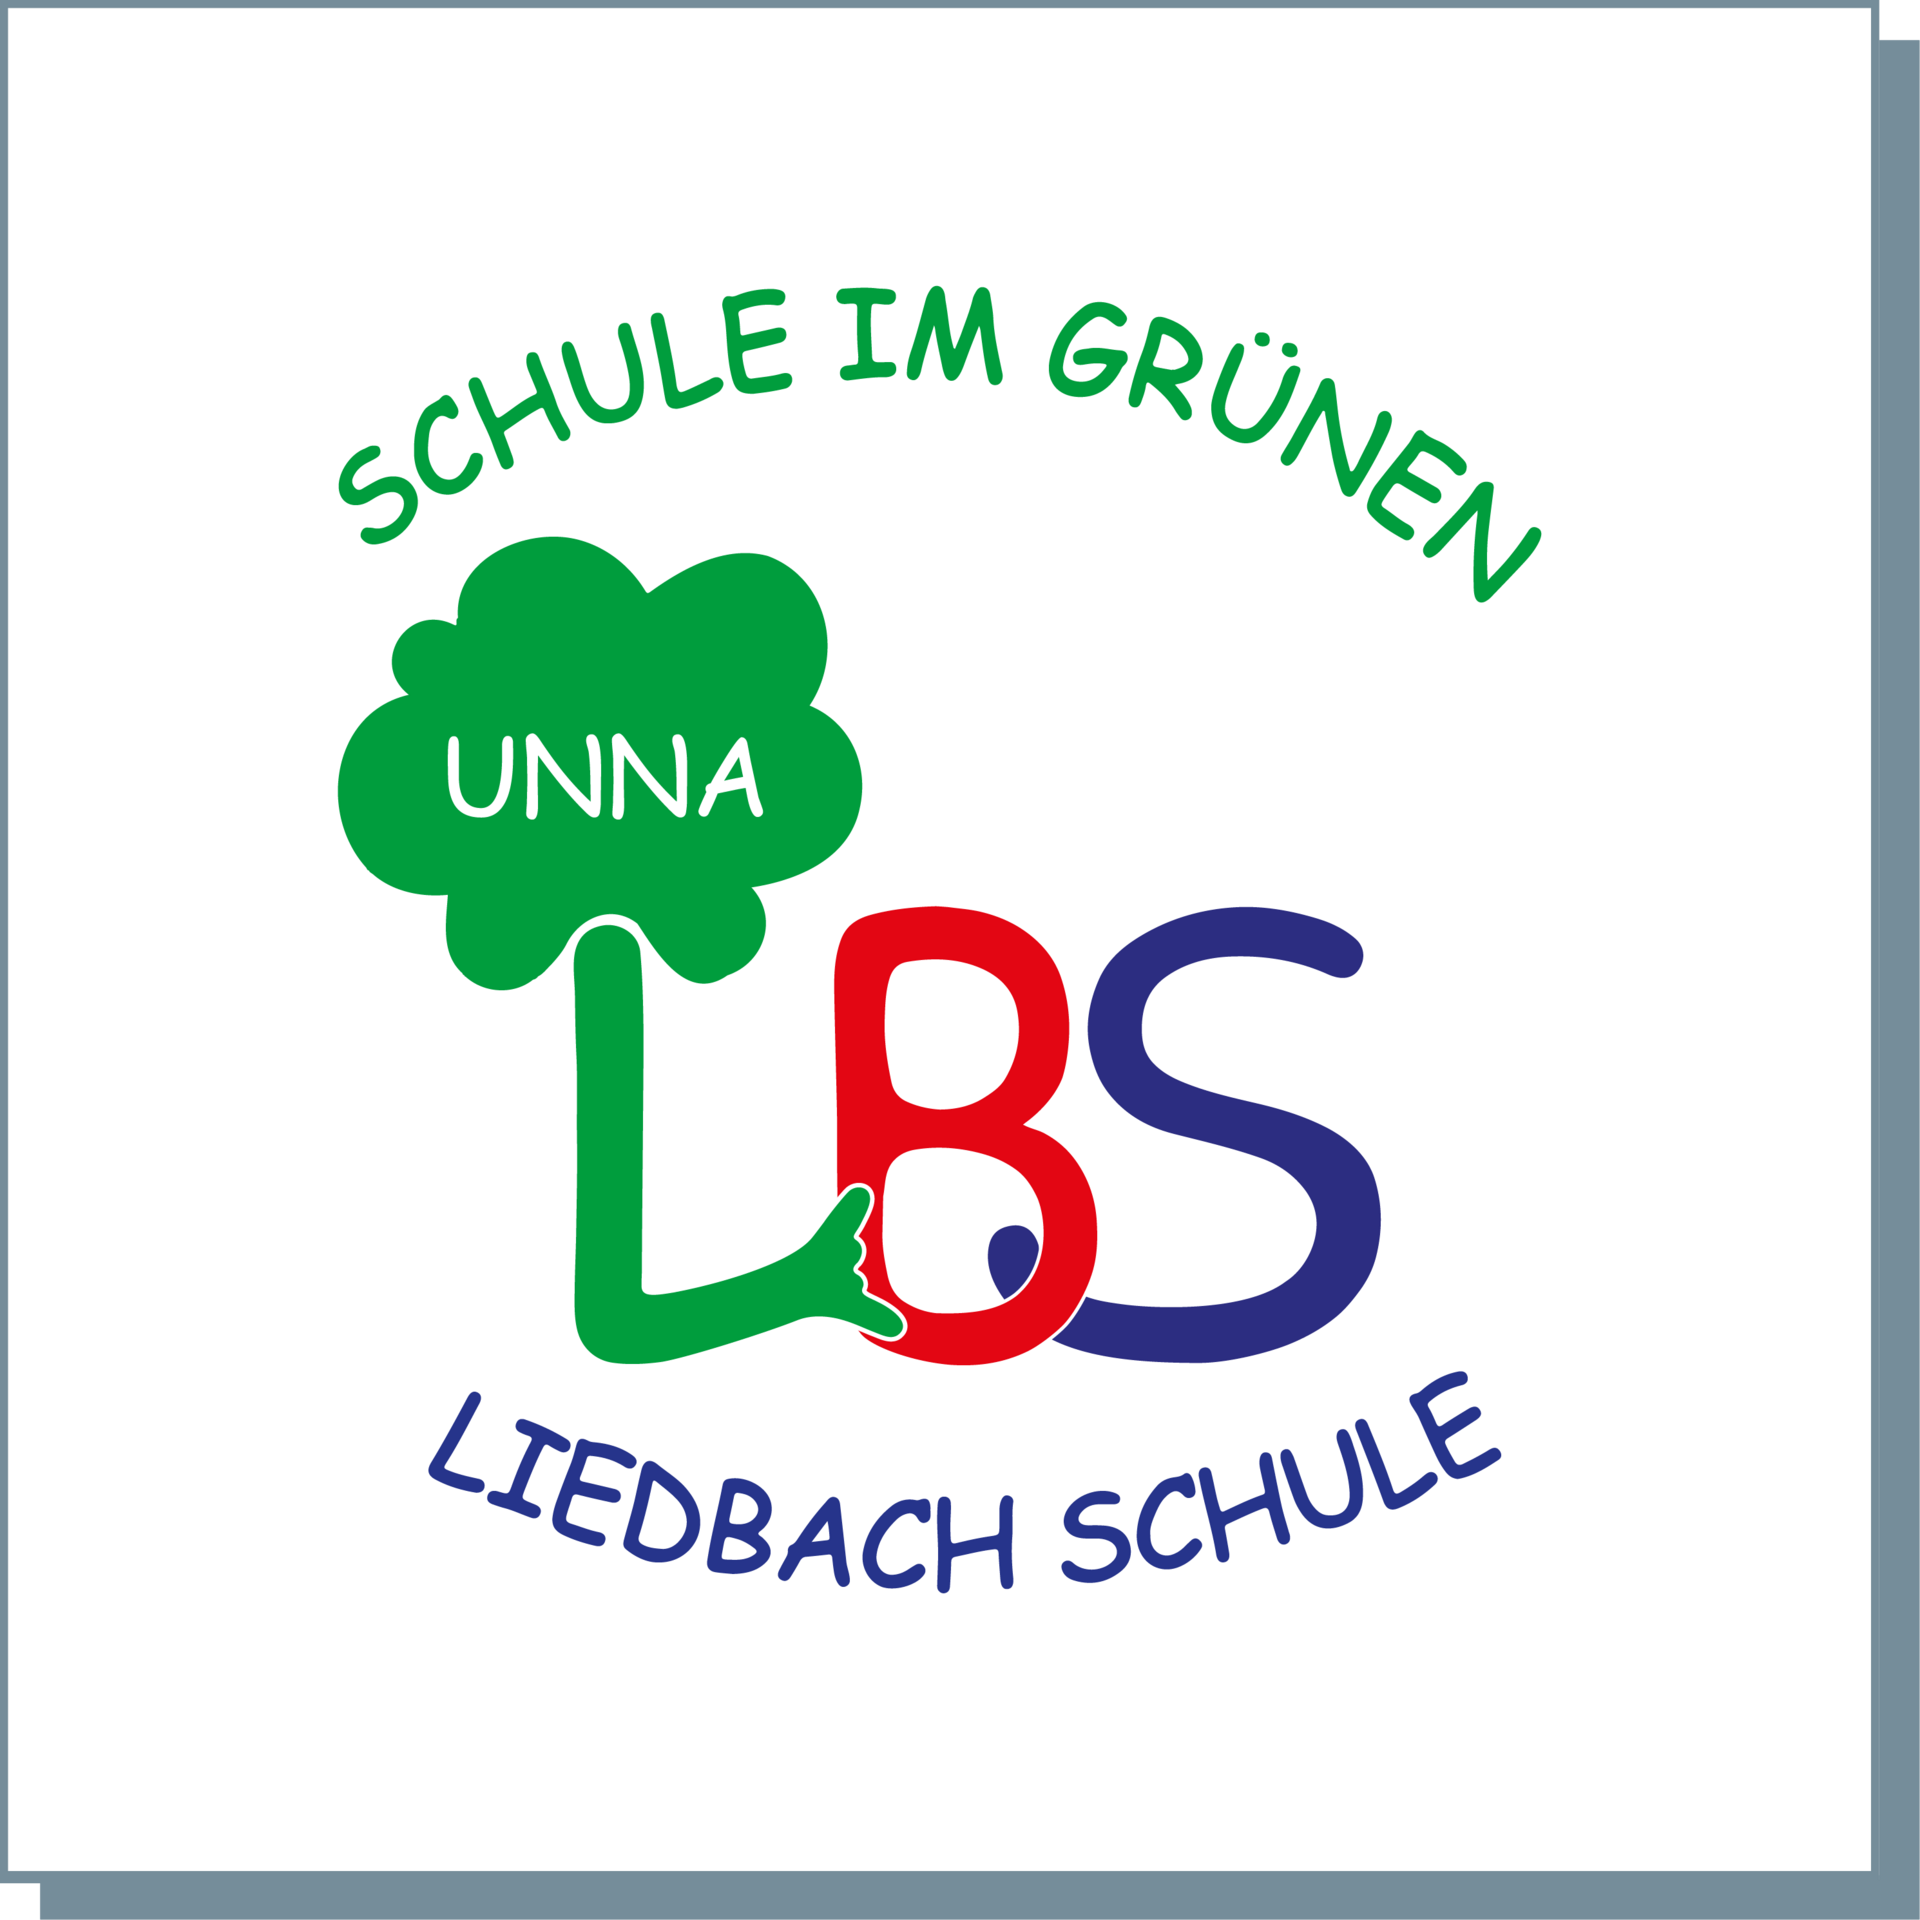 Liedbachschule